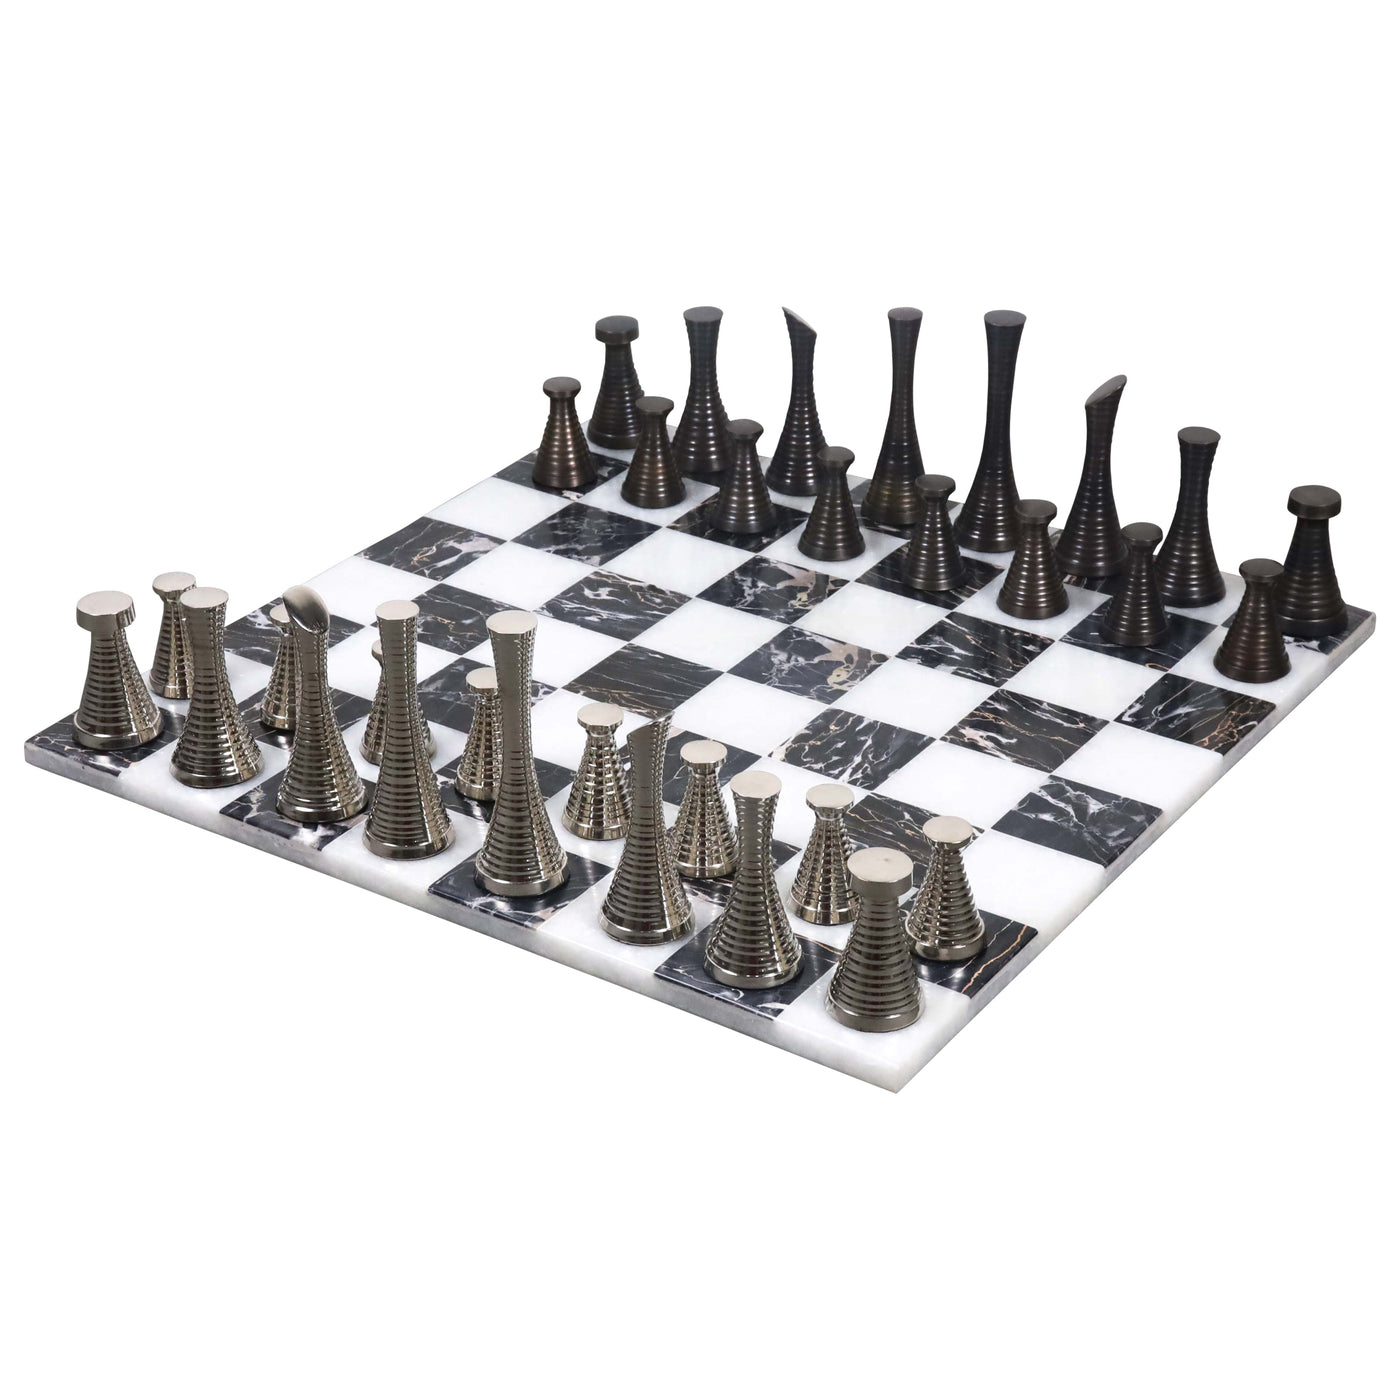 Brass Chess Set combo of 3.9" Modern Chess Pieces